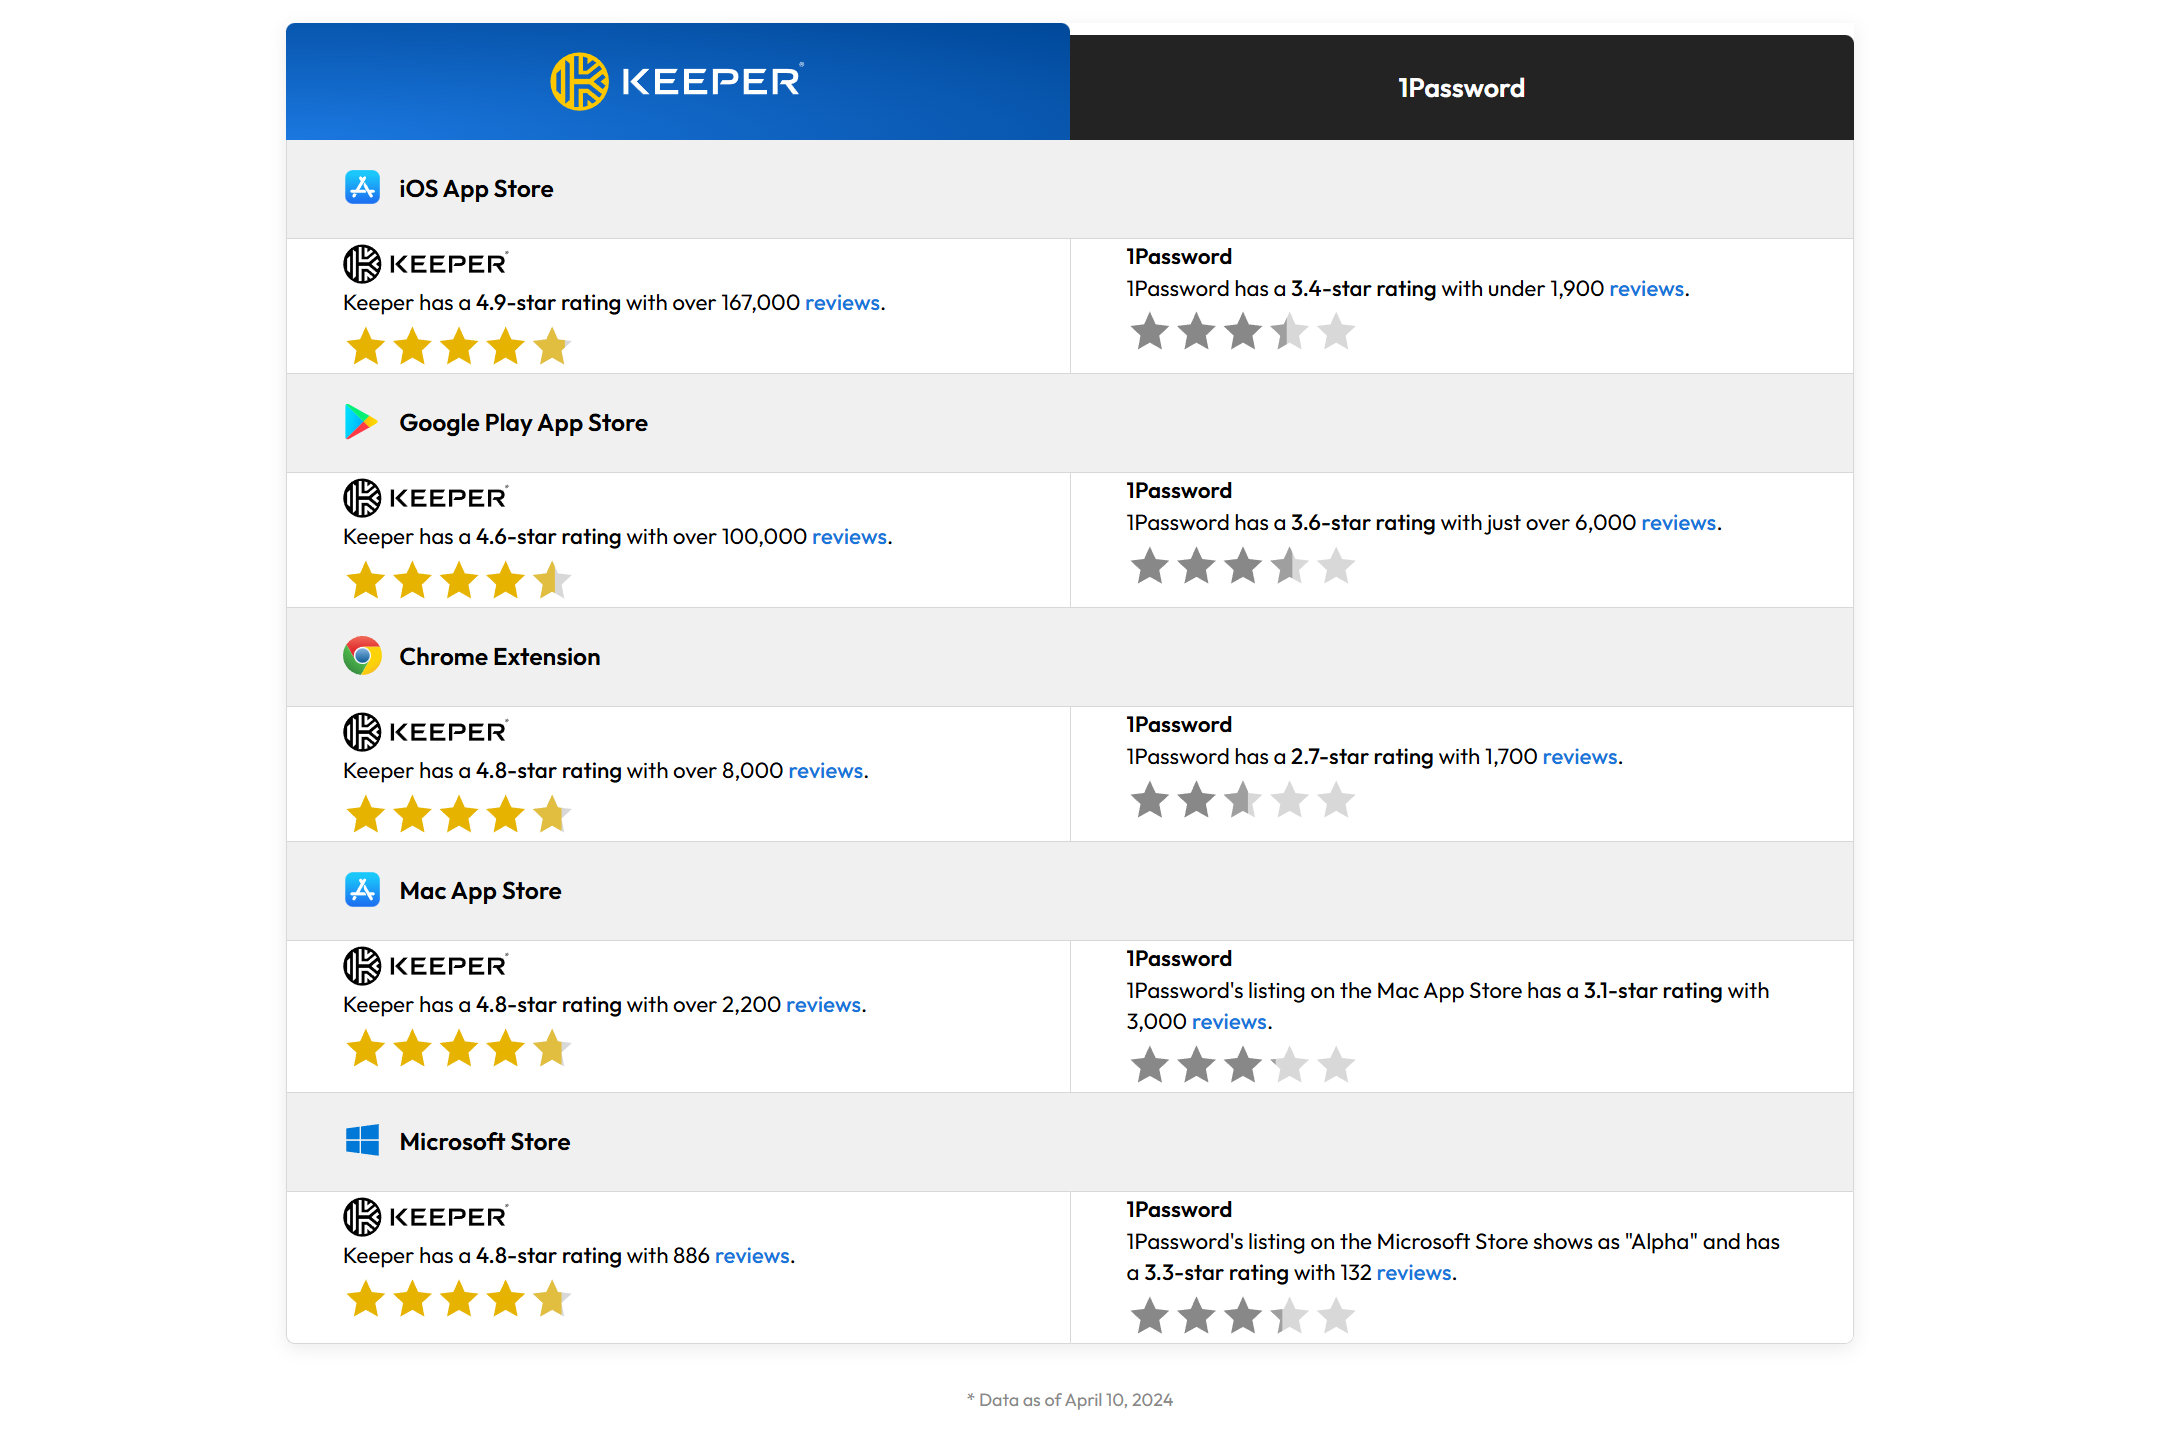 Keeper beats 1Password in app store ratings.